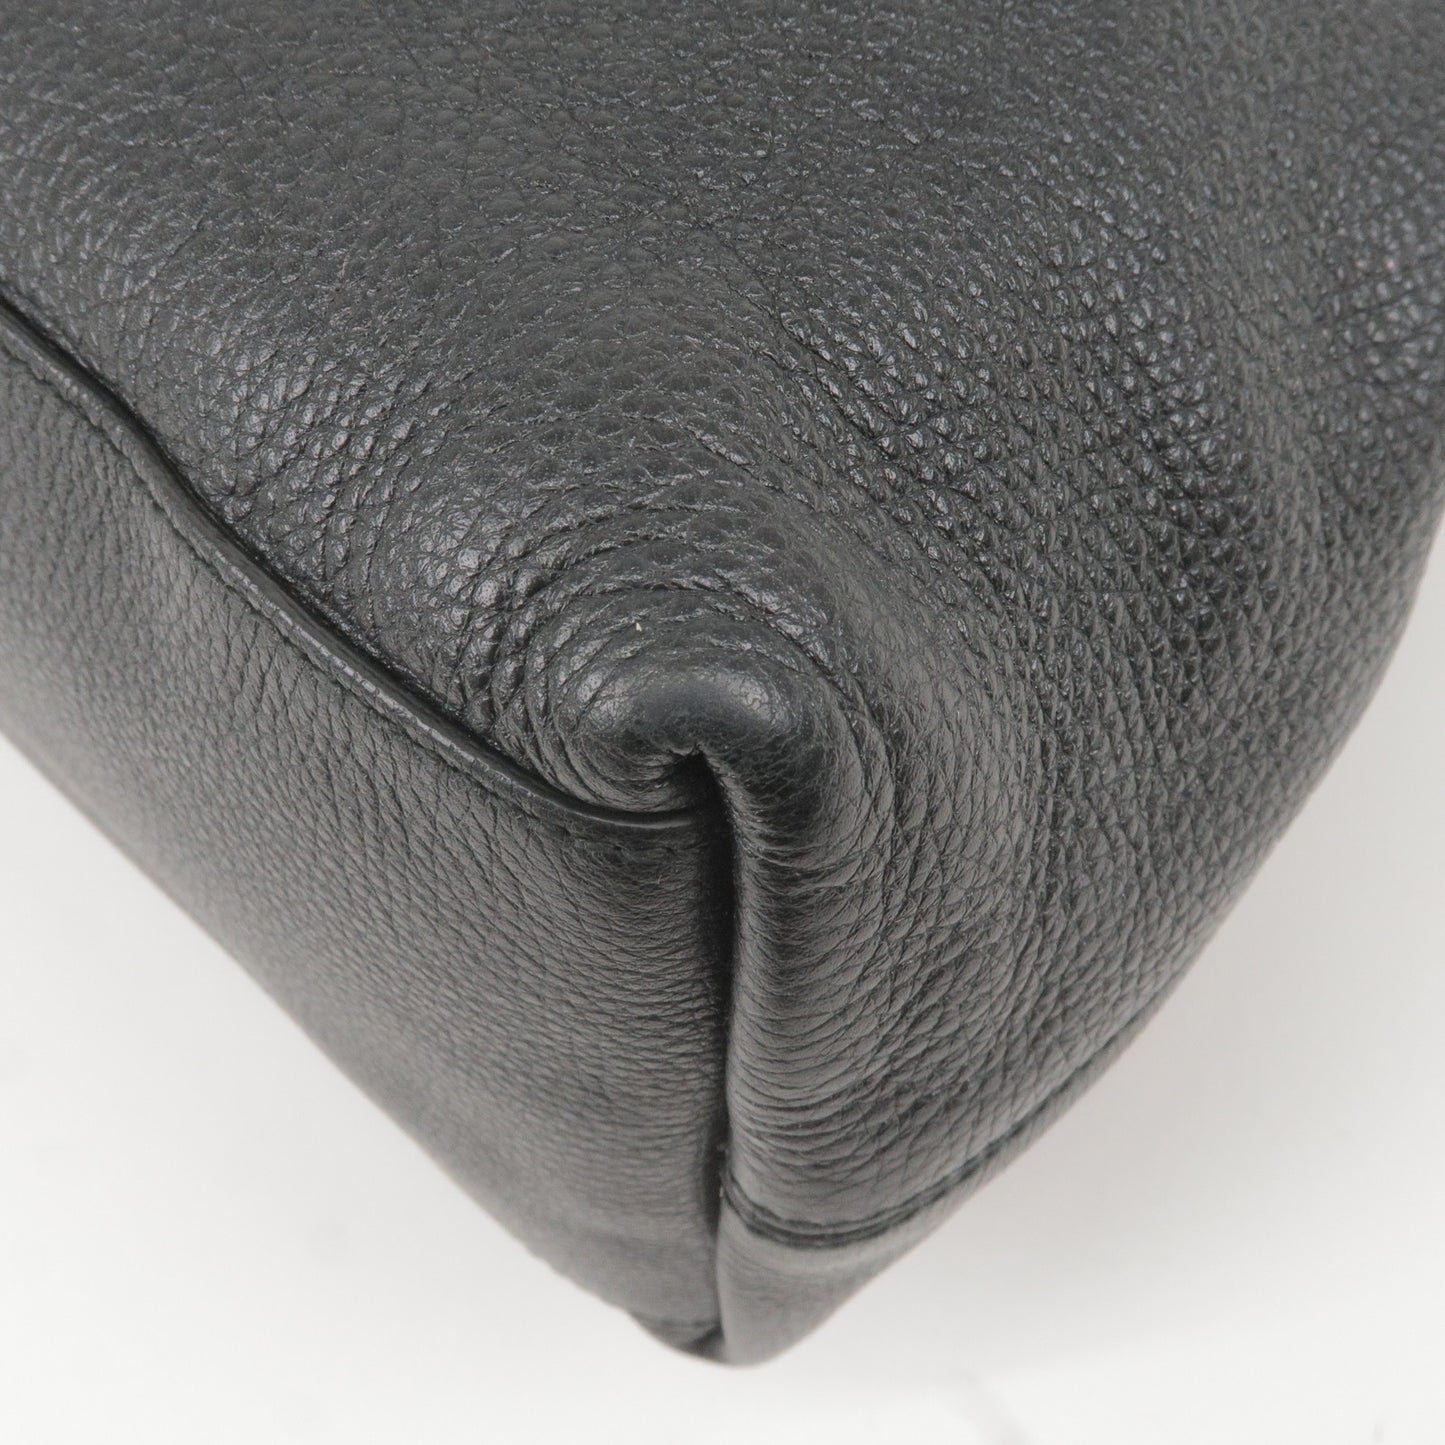 GUCCI SOHO Interlocking G Leather Chain Shoulder Bag Black 308982